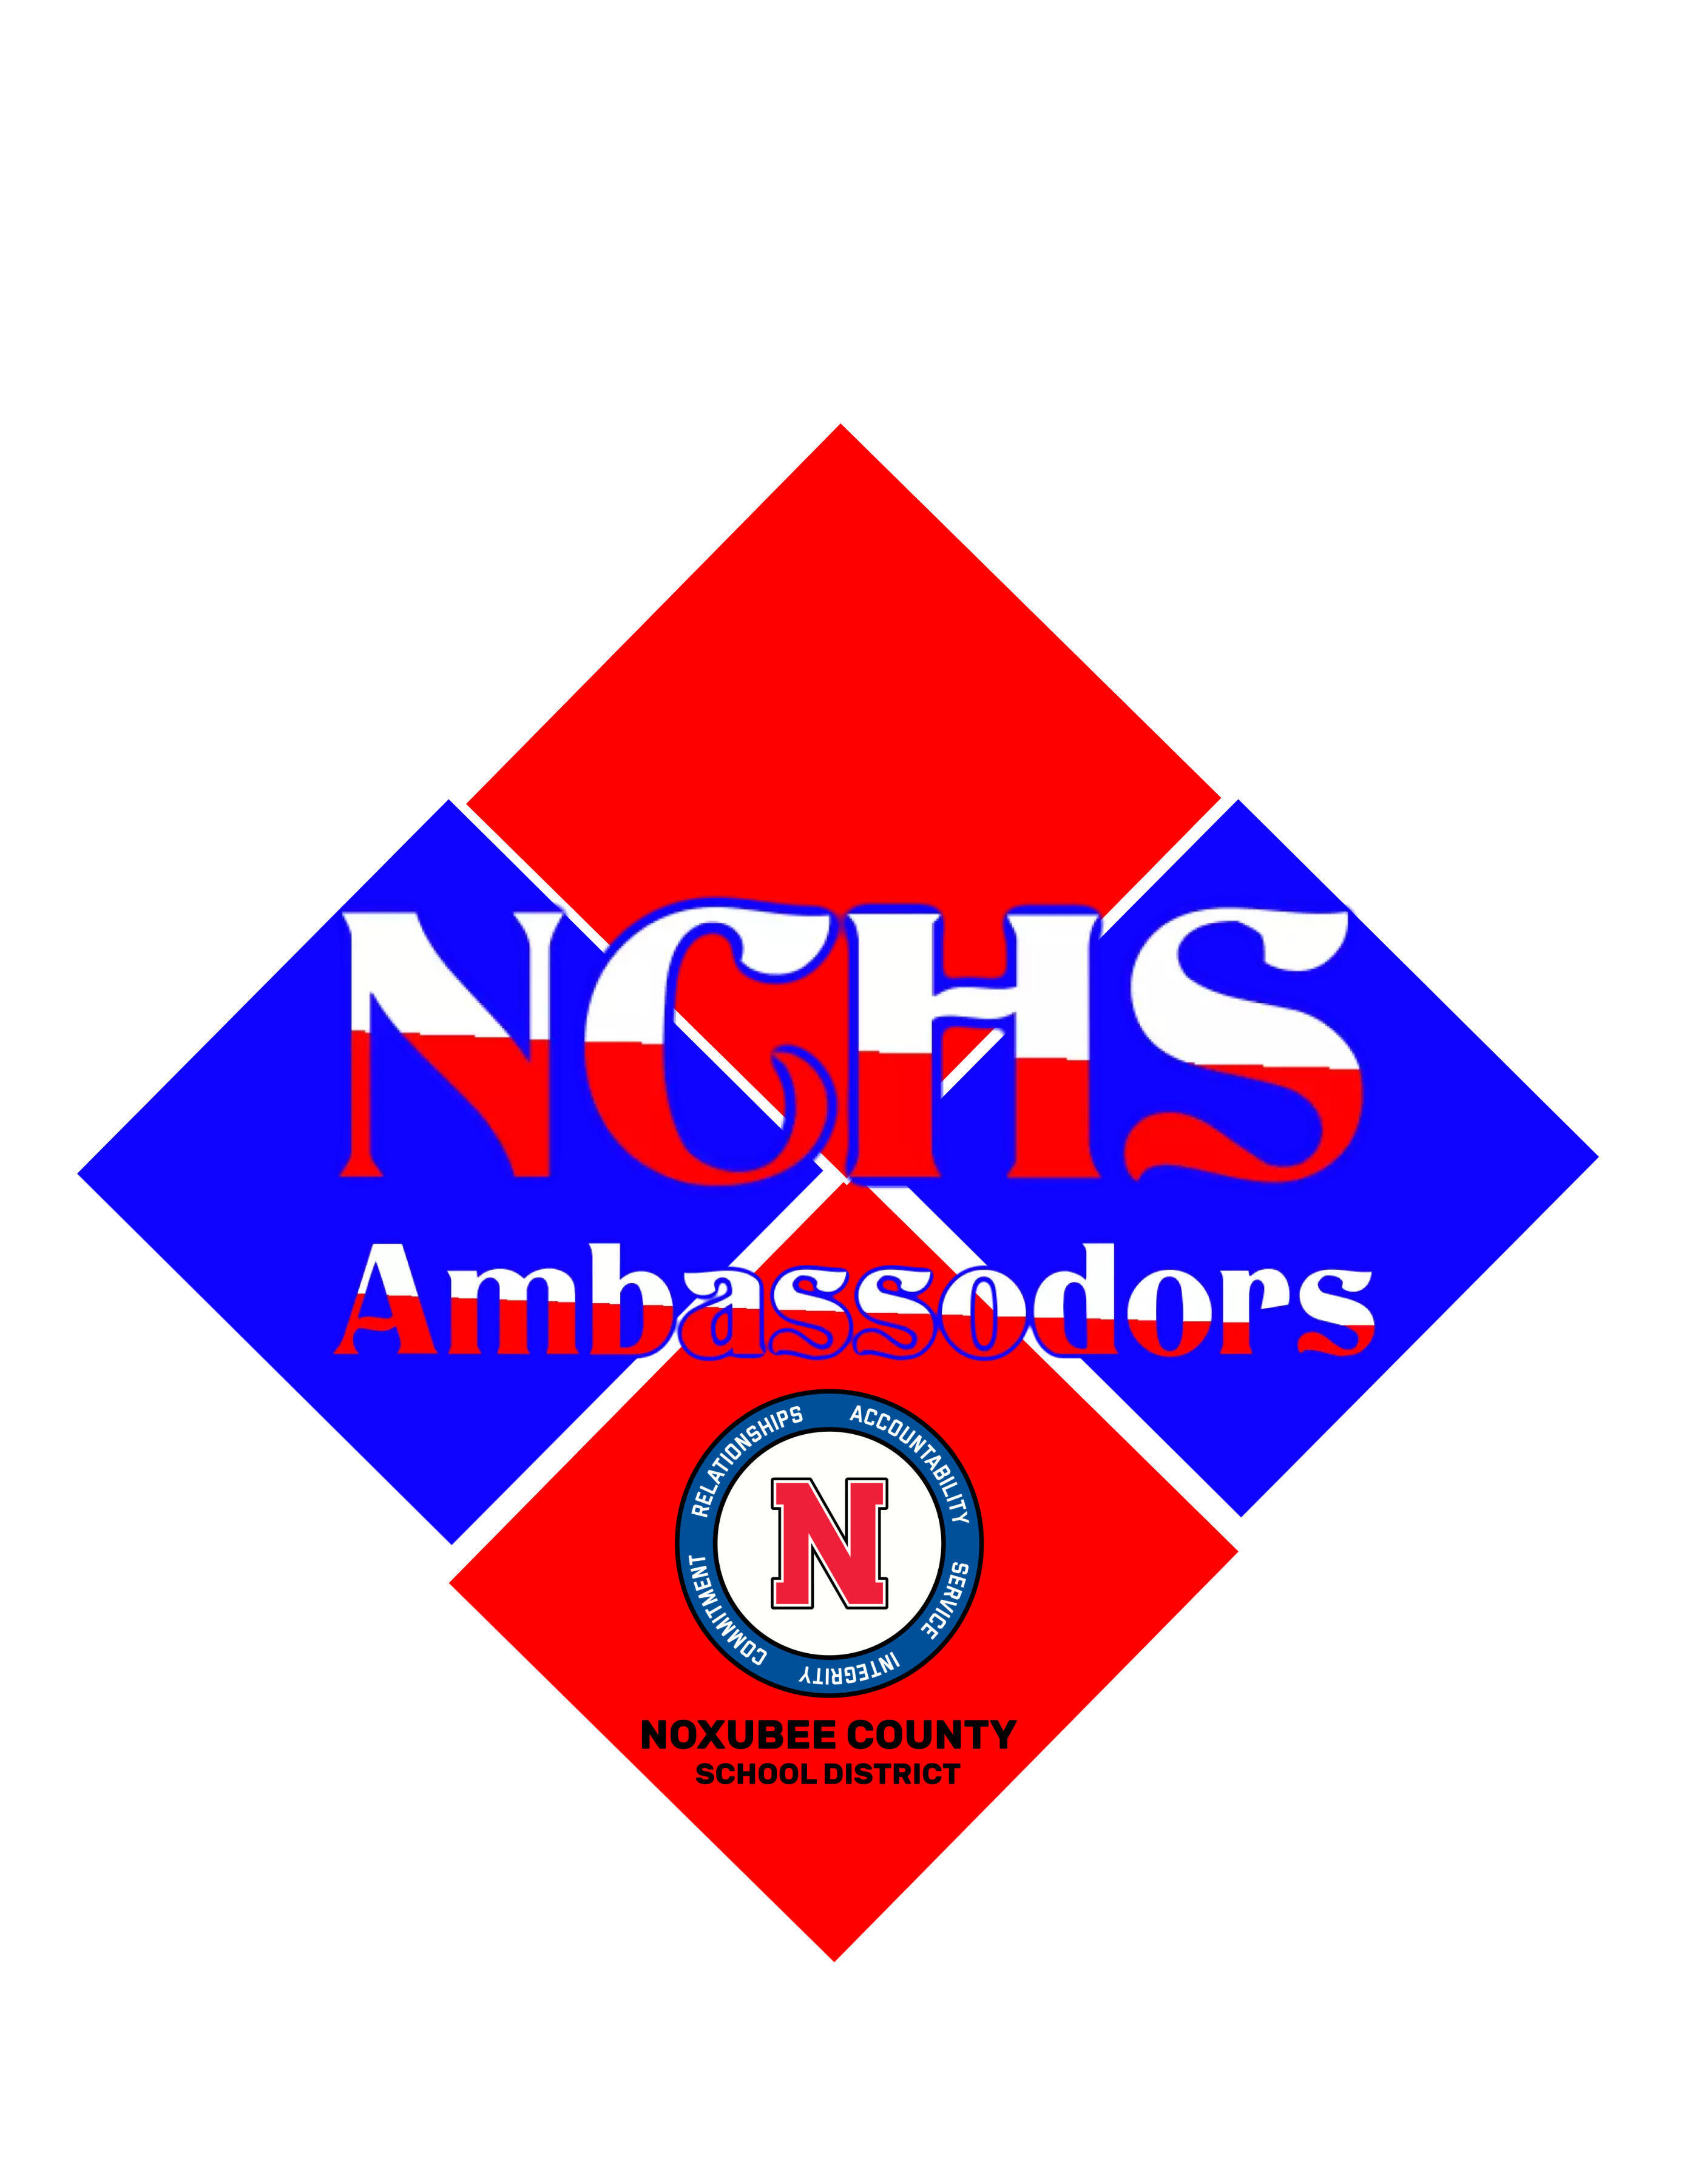 NCHS Ambassodors